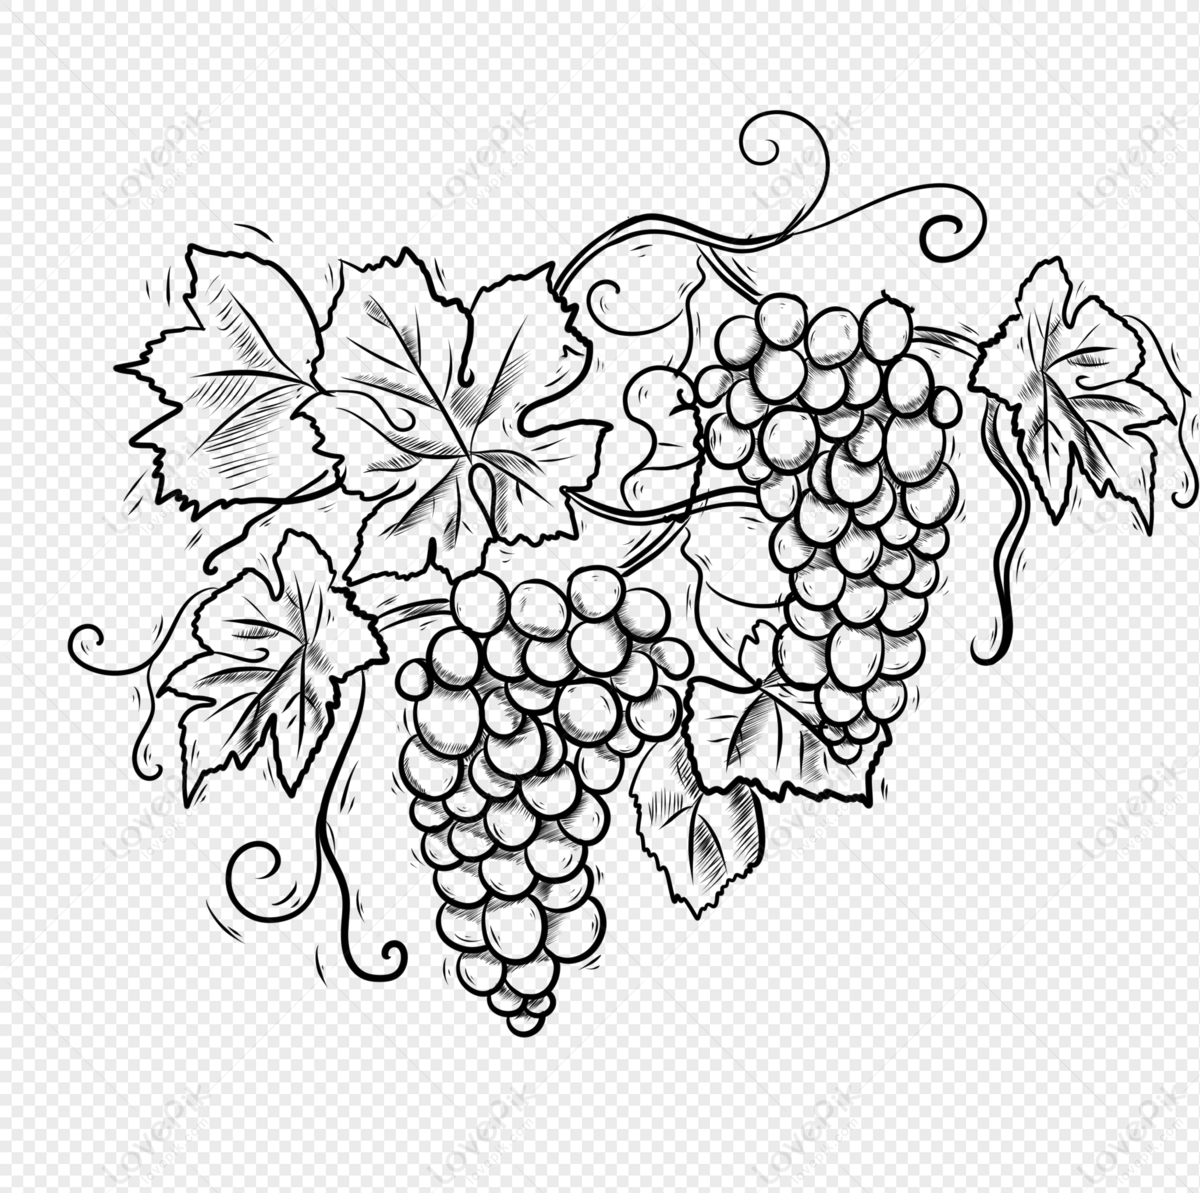 Illustration of Grape Fruits Vector Drawing 21724969 Vector Art at Vecteezy